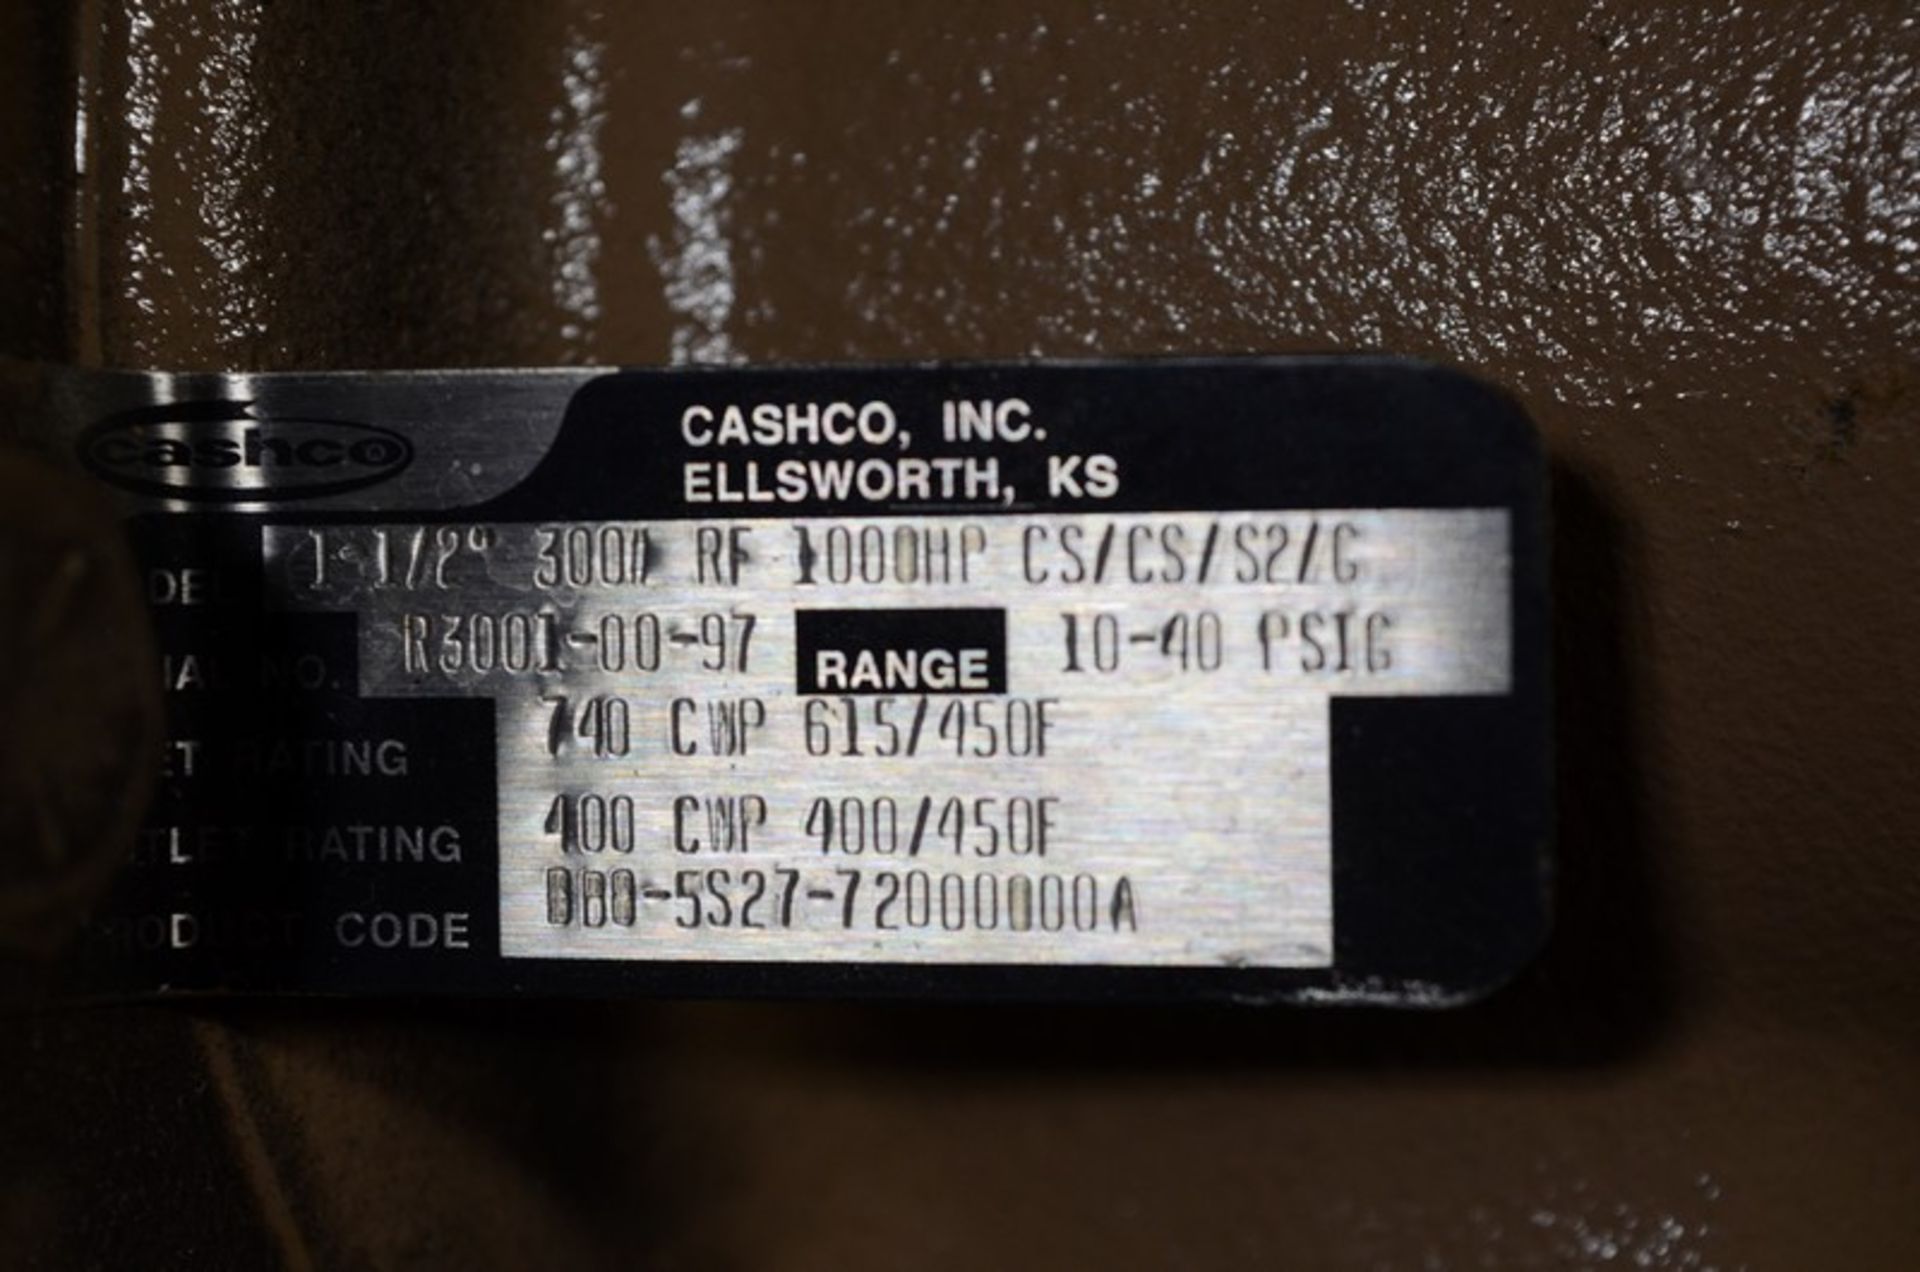 Cashco 1-1/2" 300# RF 1000HP CS/CS/S2/G Valve ; Morris CL-450 Pump with 1/38" Shaft - Image 2 of 5